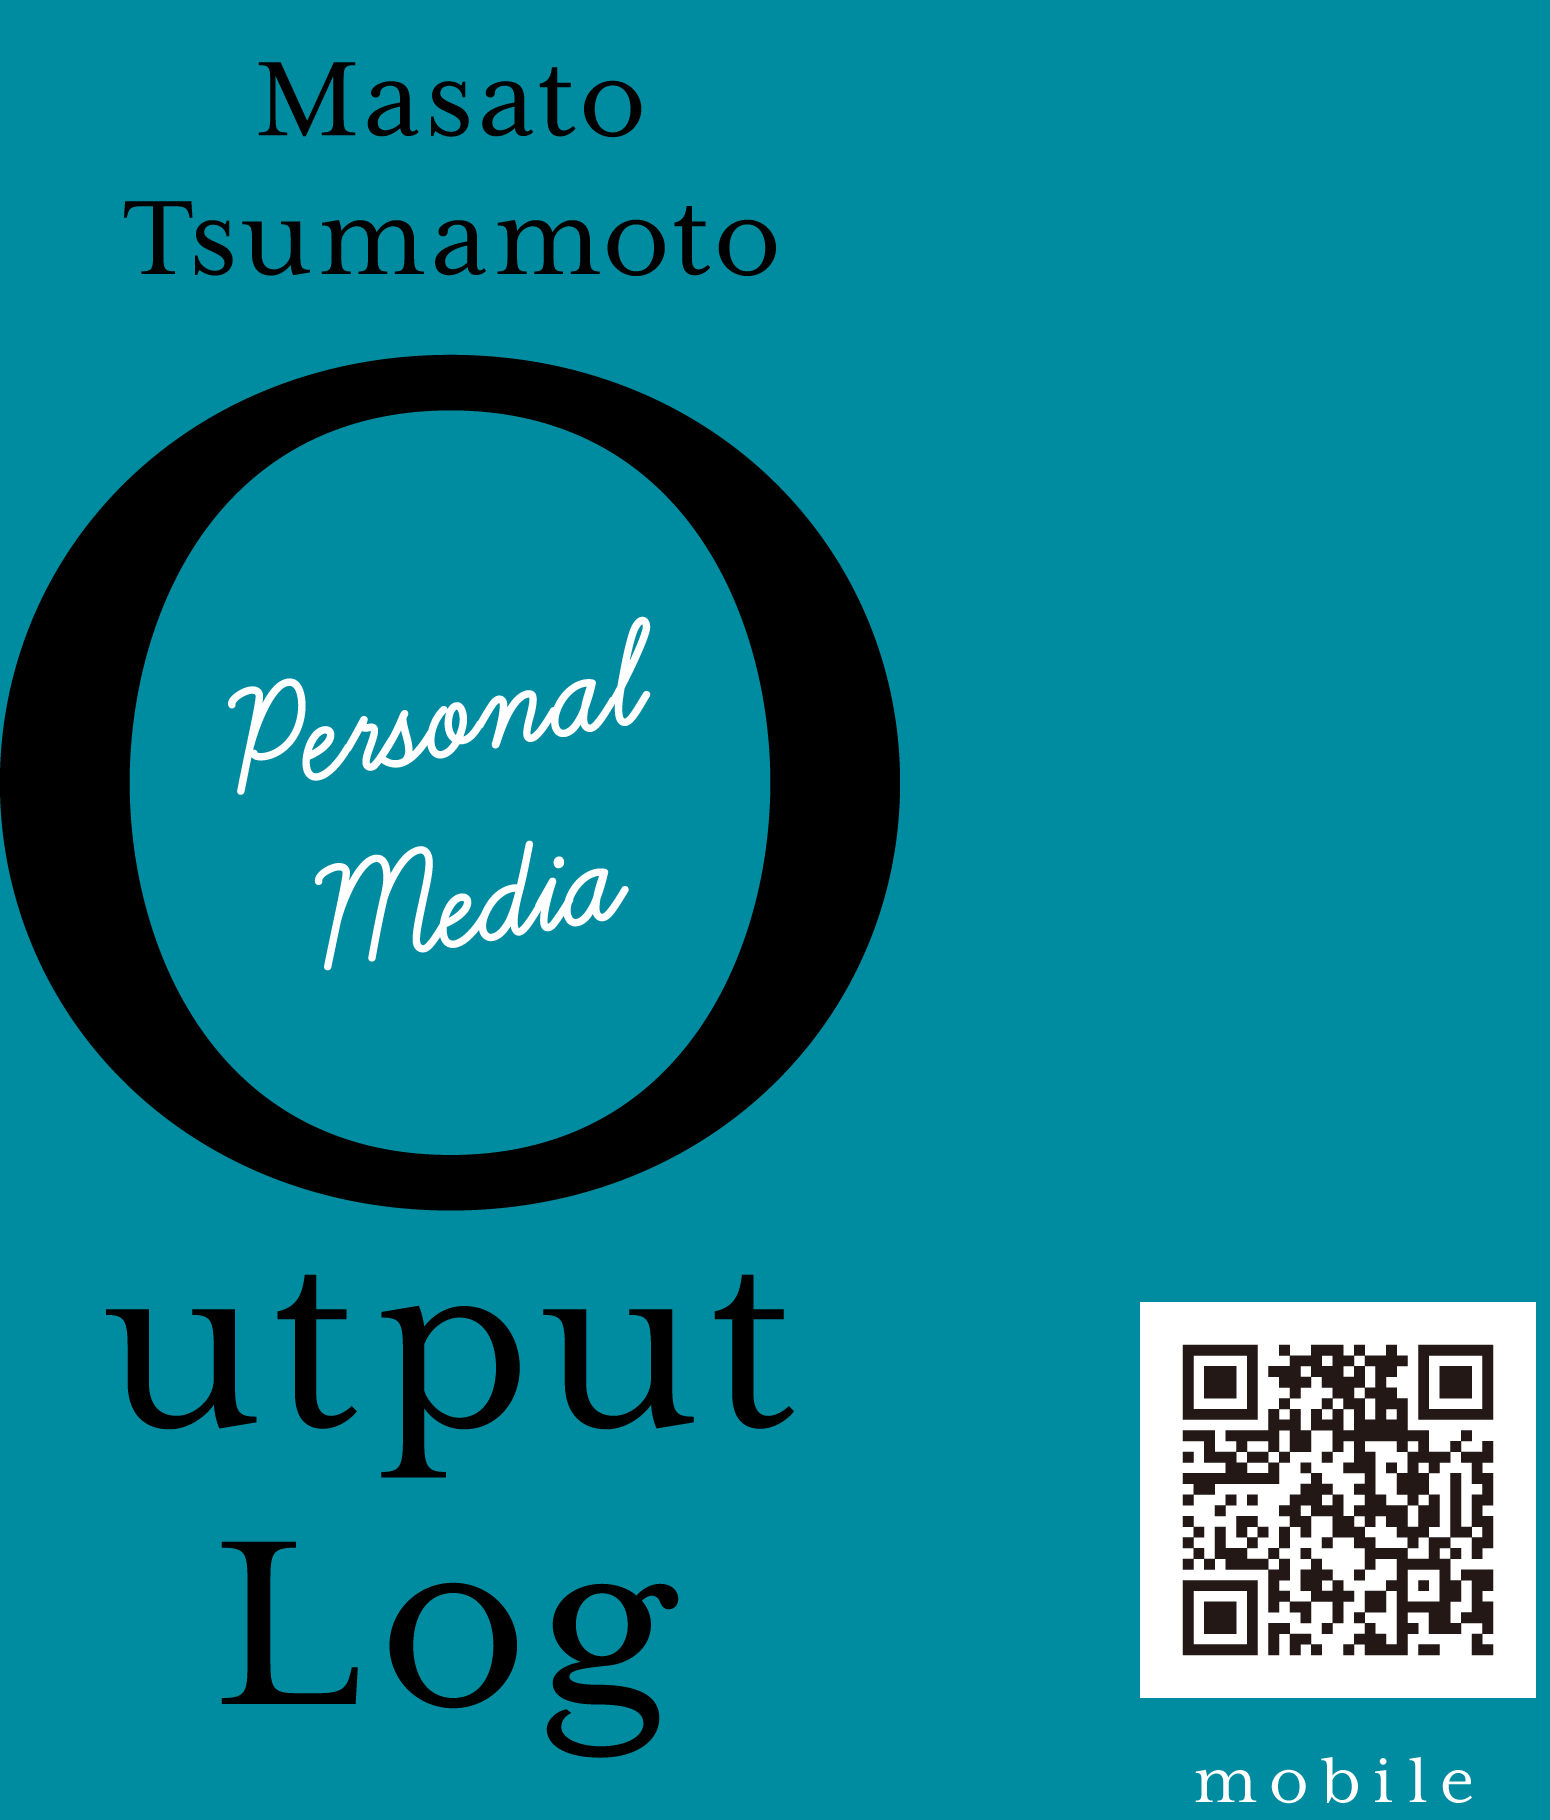 Masato Tsumamoto Output Log - 裙本理人
                   アウトプットログ